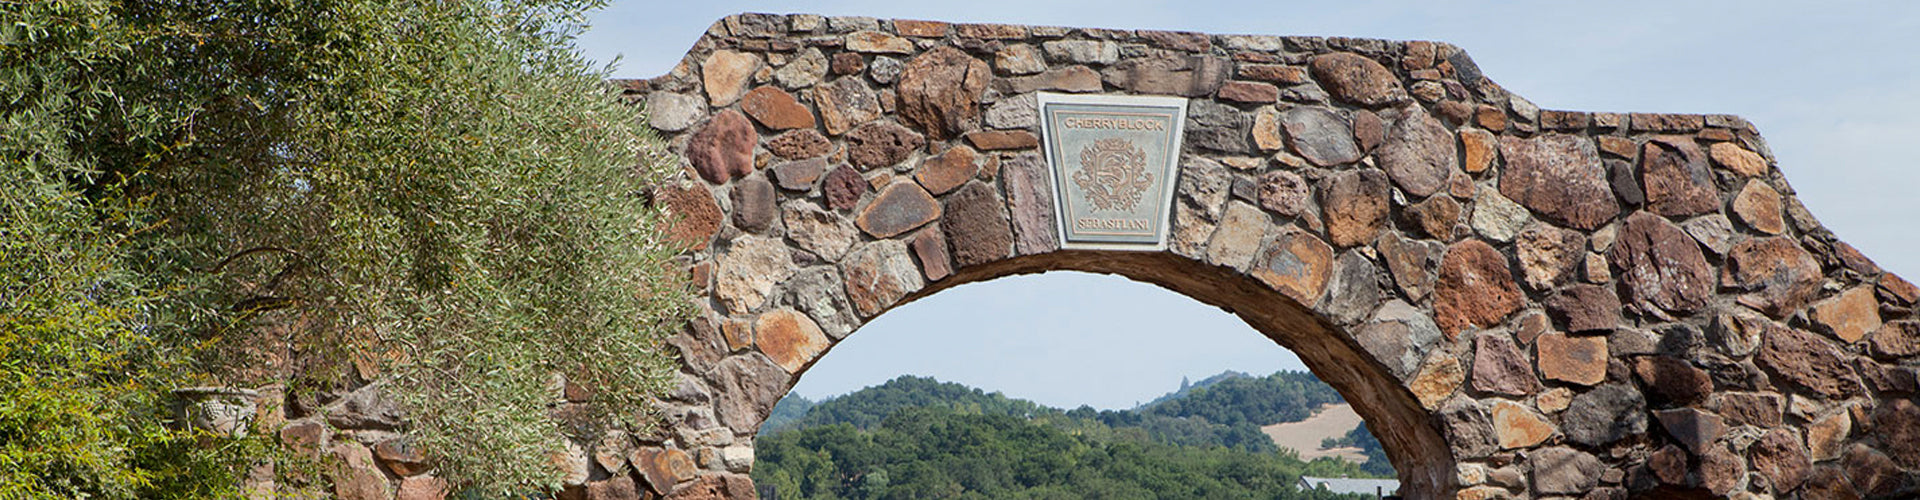 Sebastiani Vineyards Stone Entrance Archway